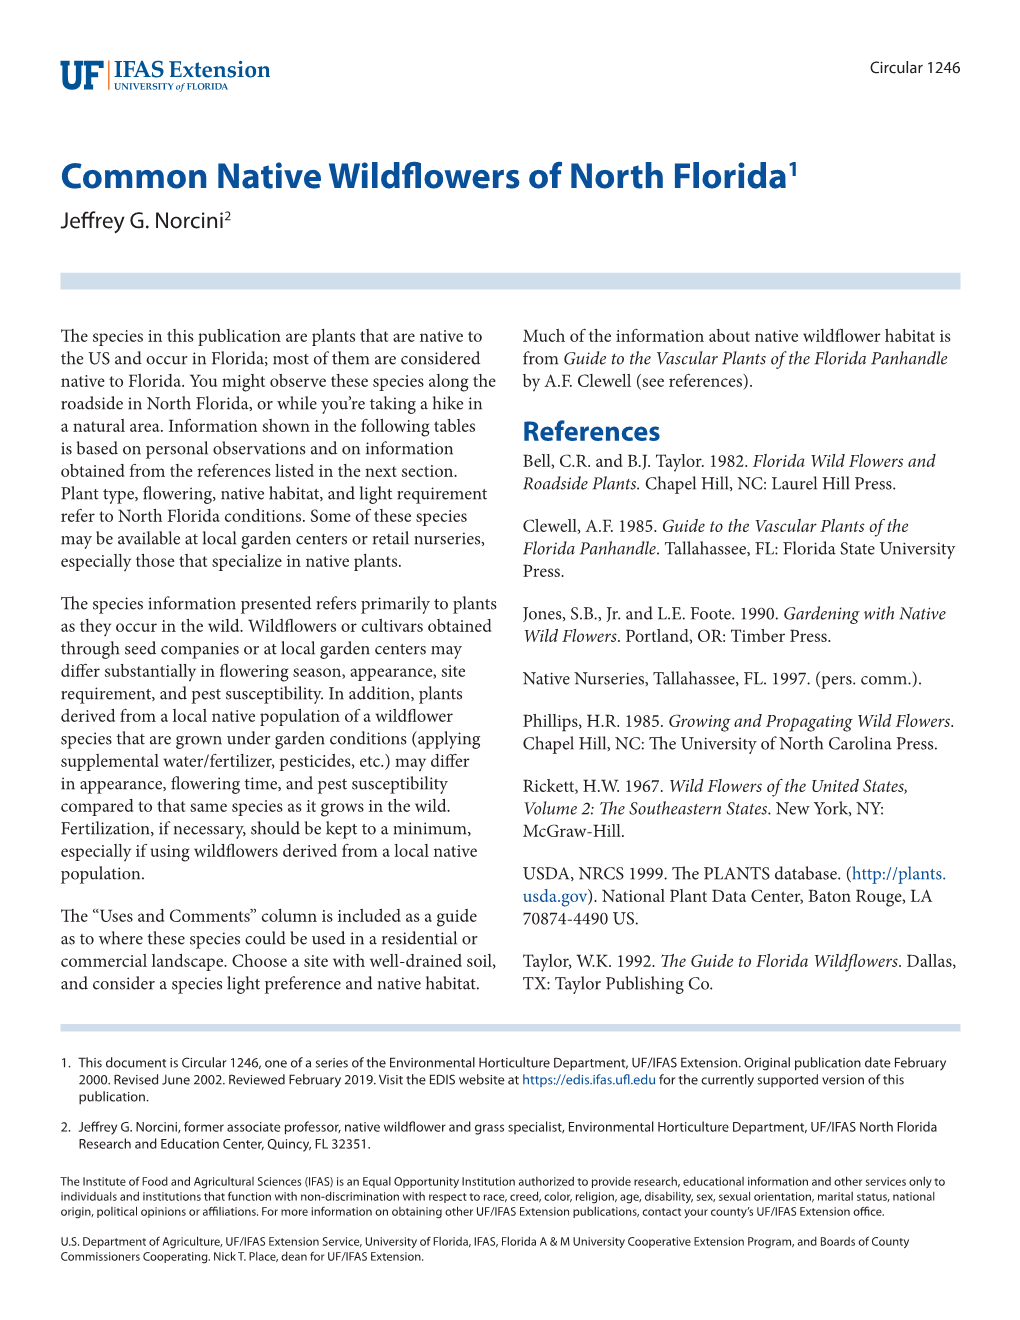 Common Native Wildflowers of North Florida1 Jeffrey G